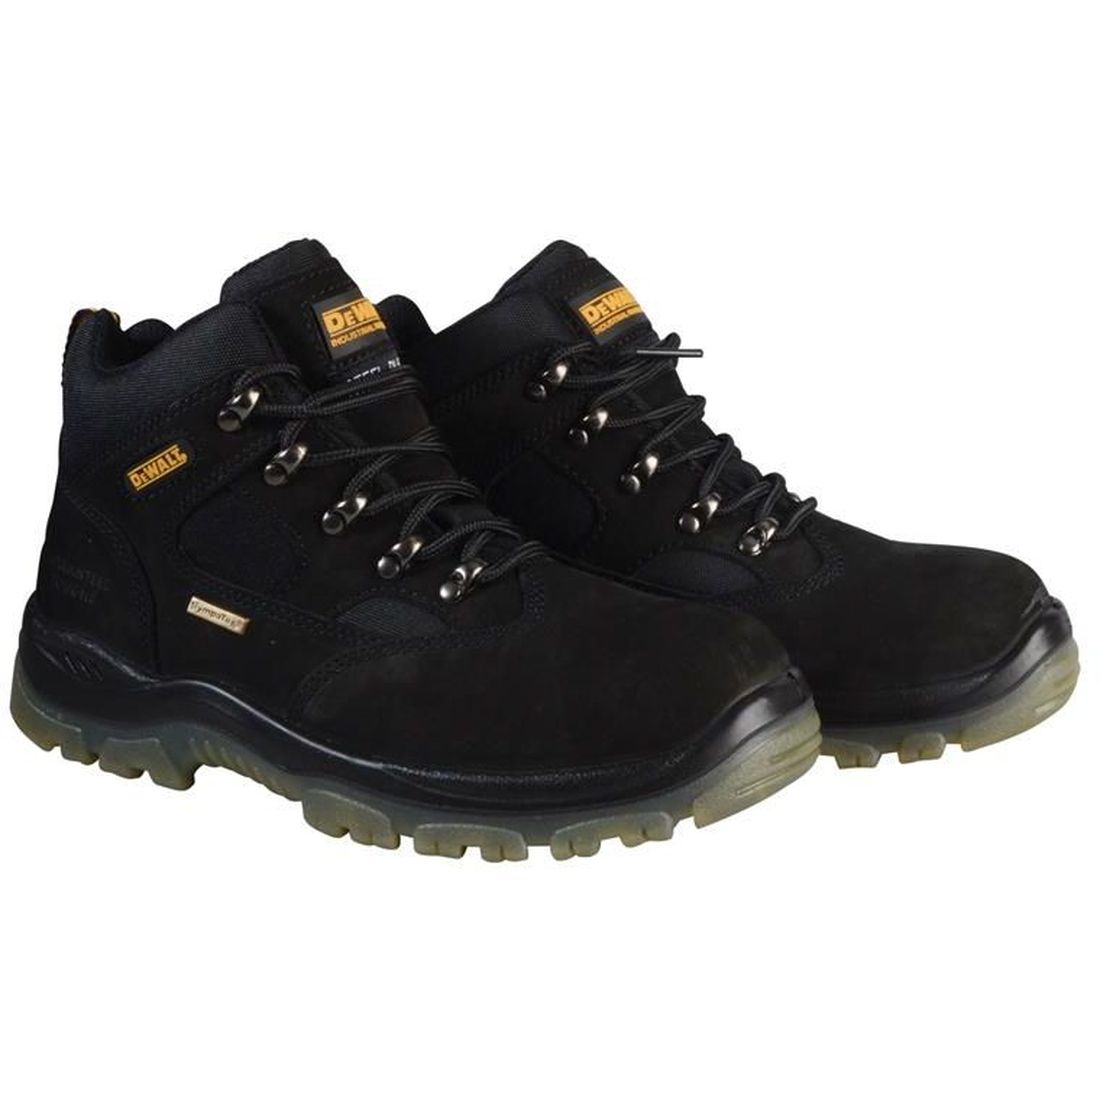 DEWALT Challenger 3 Sympatex Waterproof Hiker Boots Black UK 6 EUR 39                  